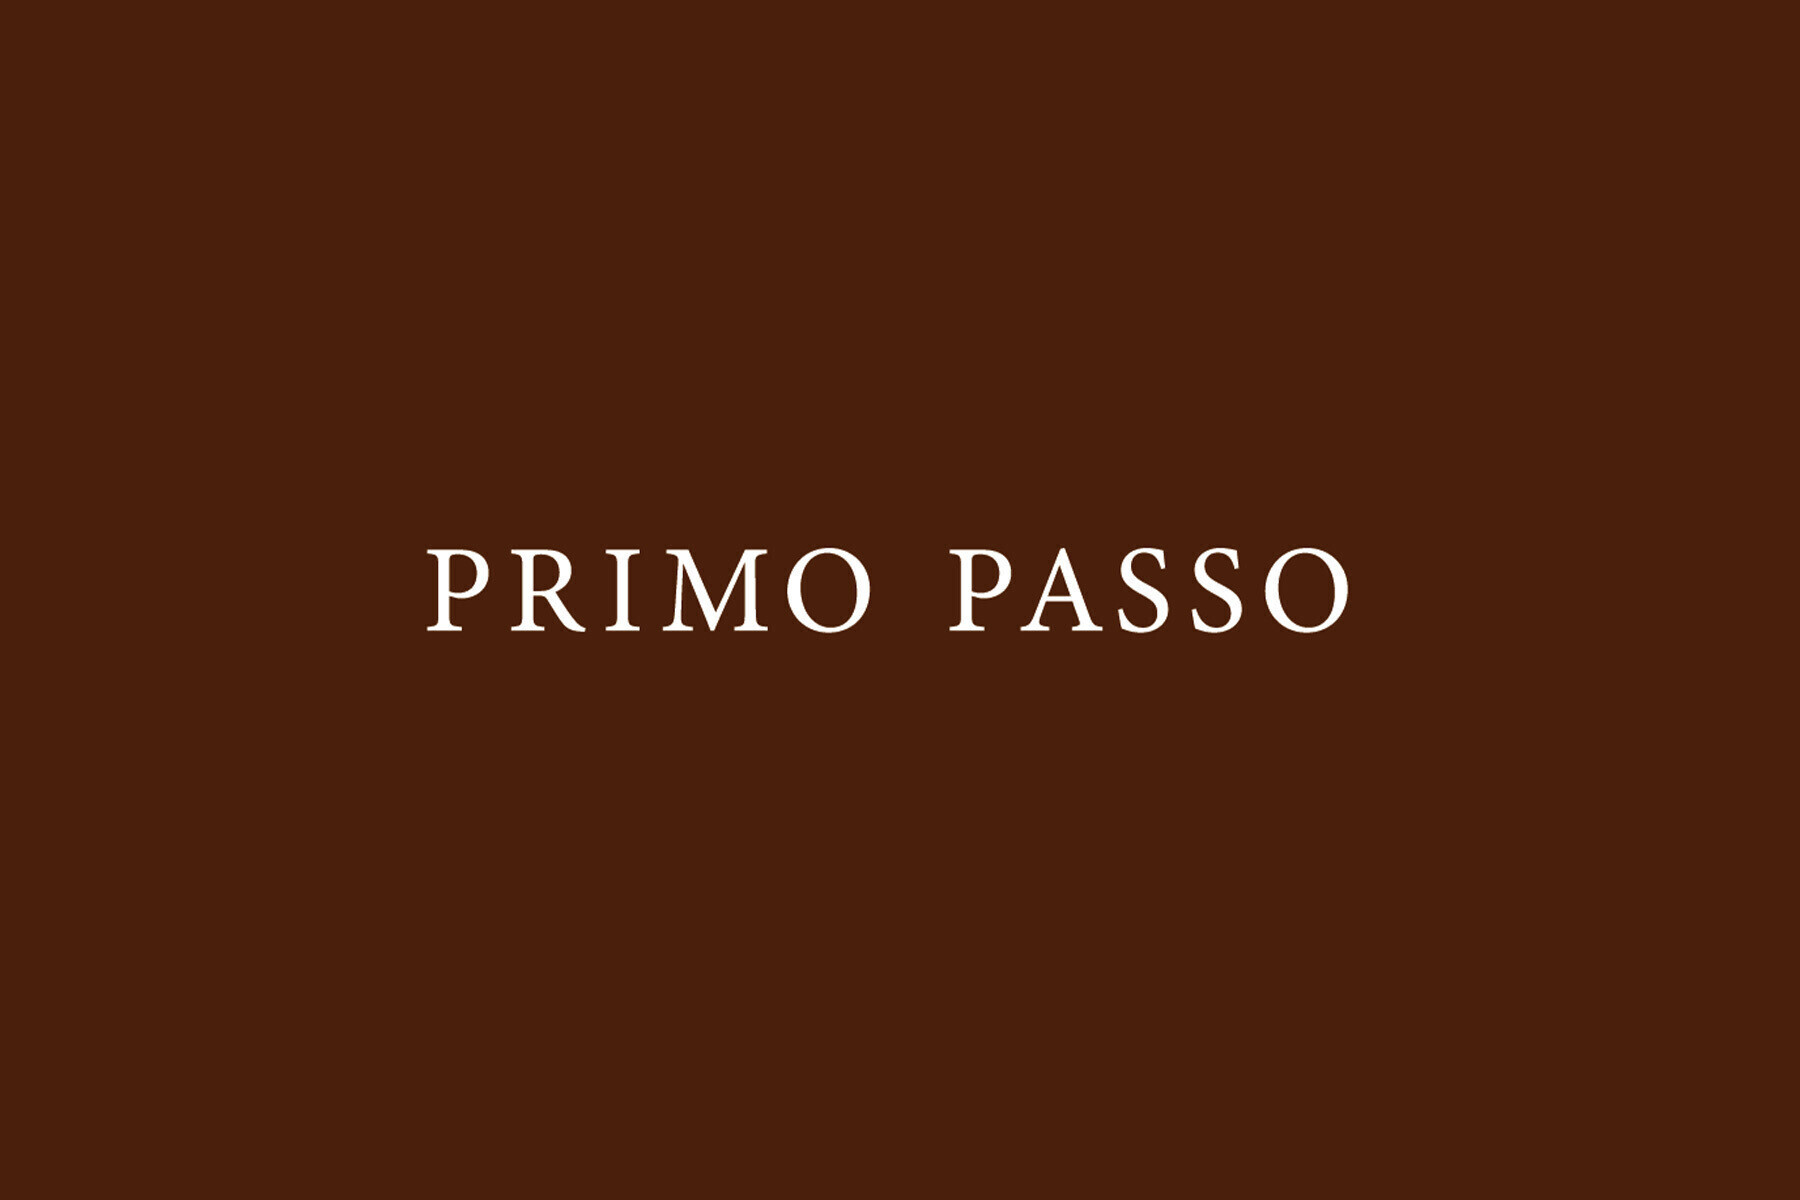 PRIMO PASSO's image 1